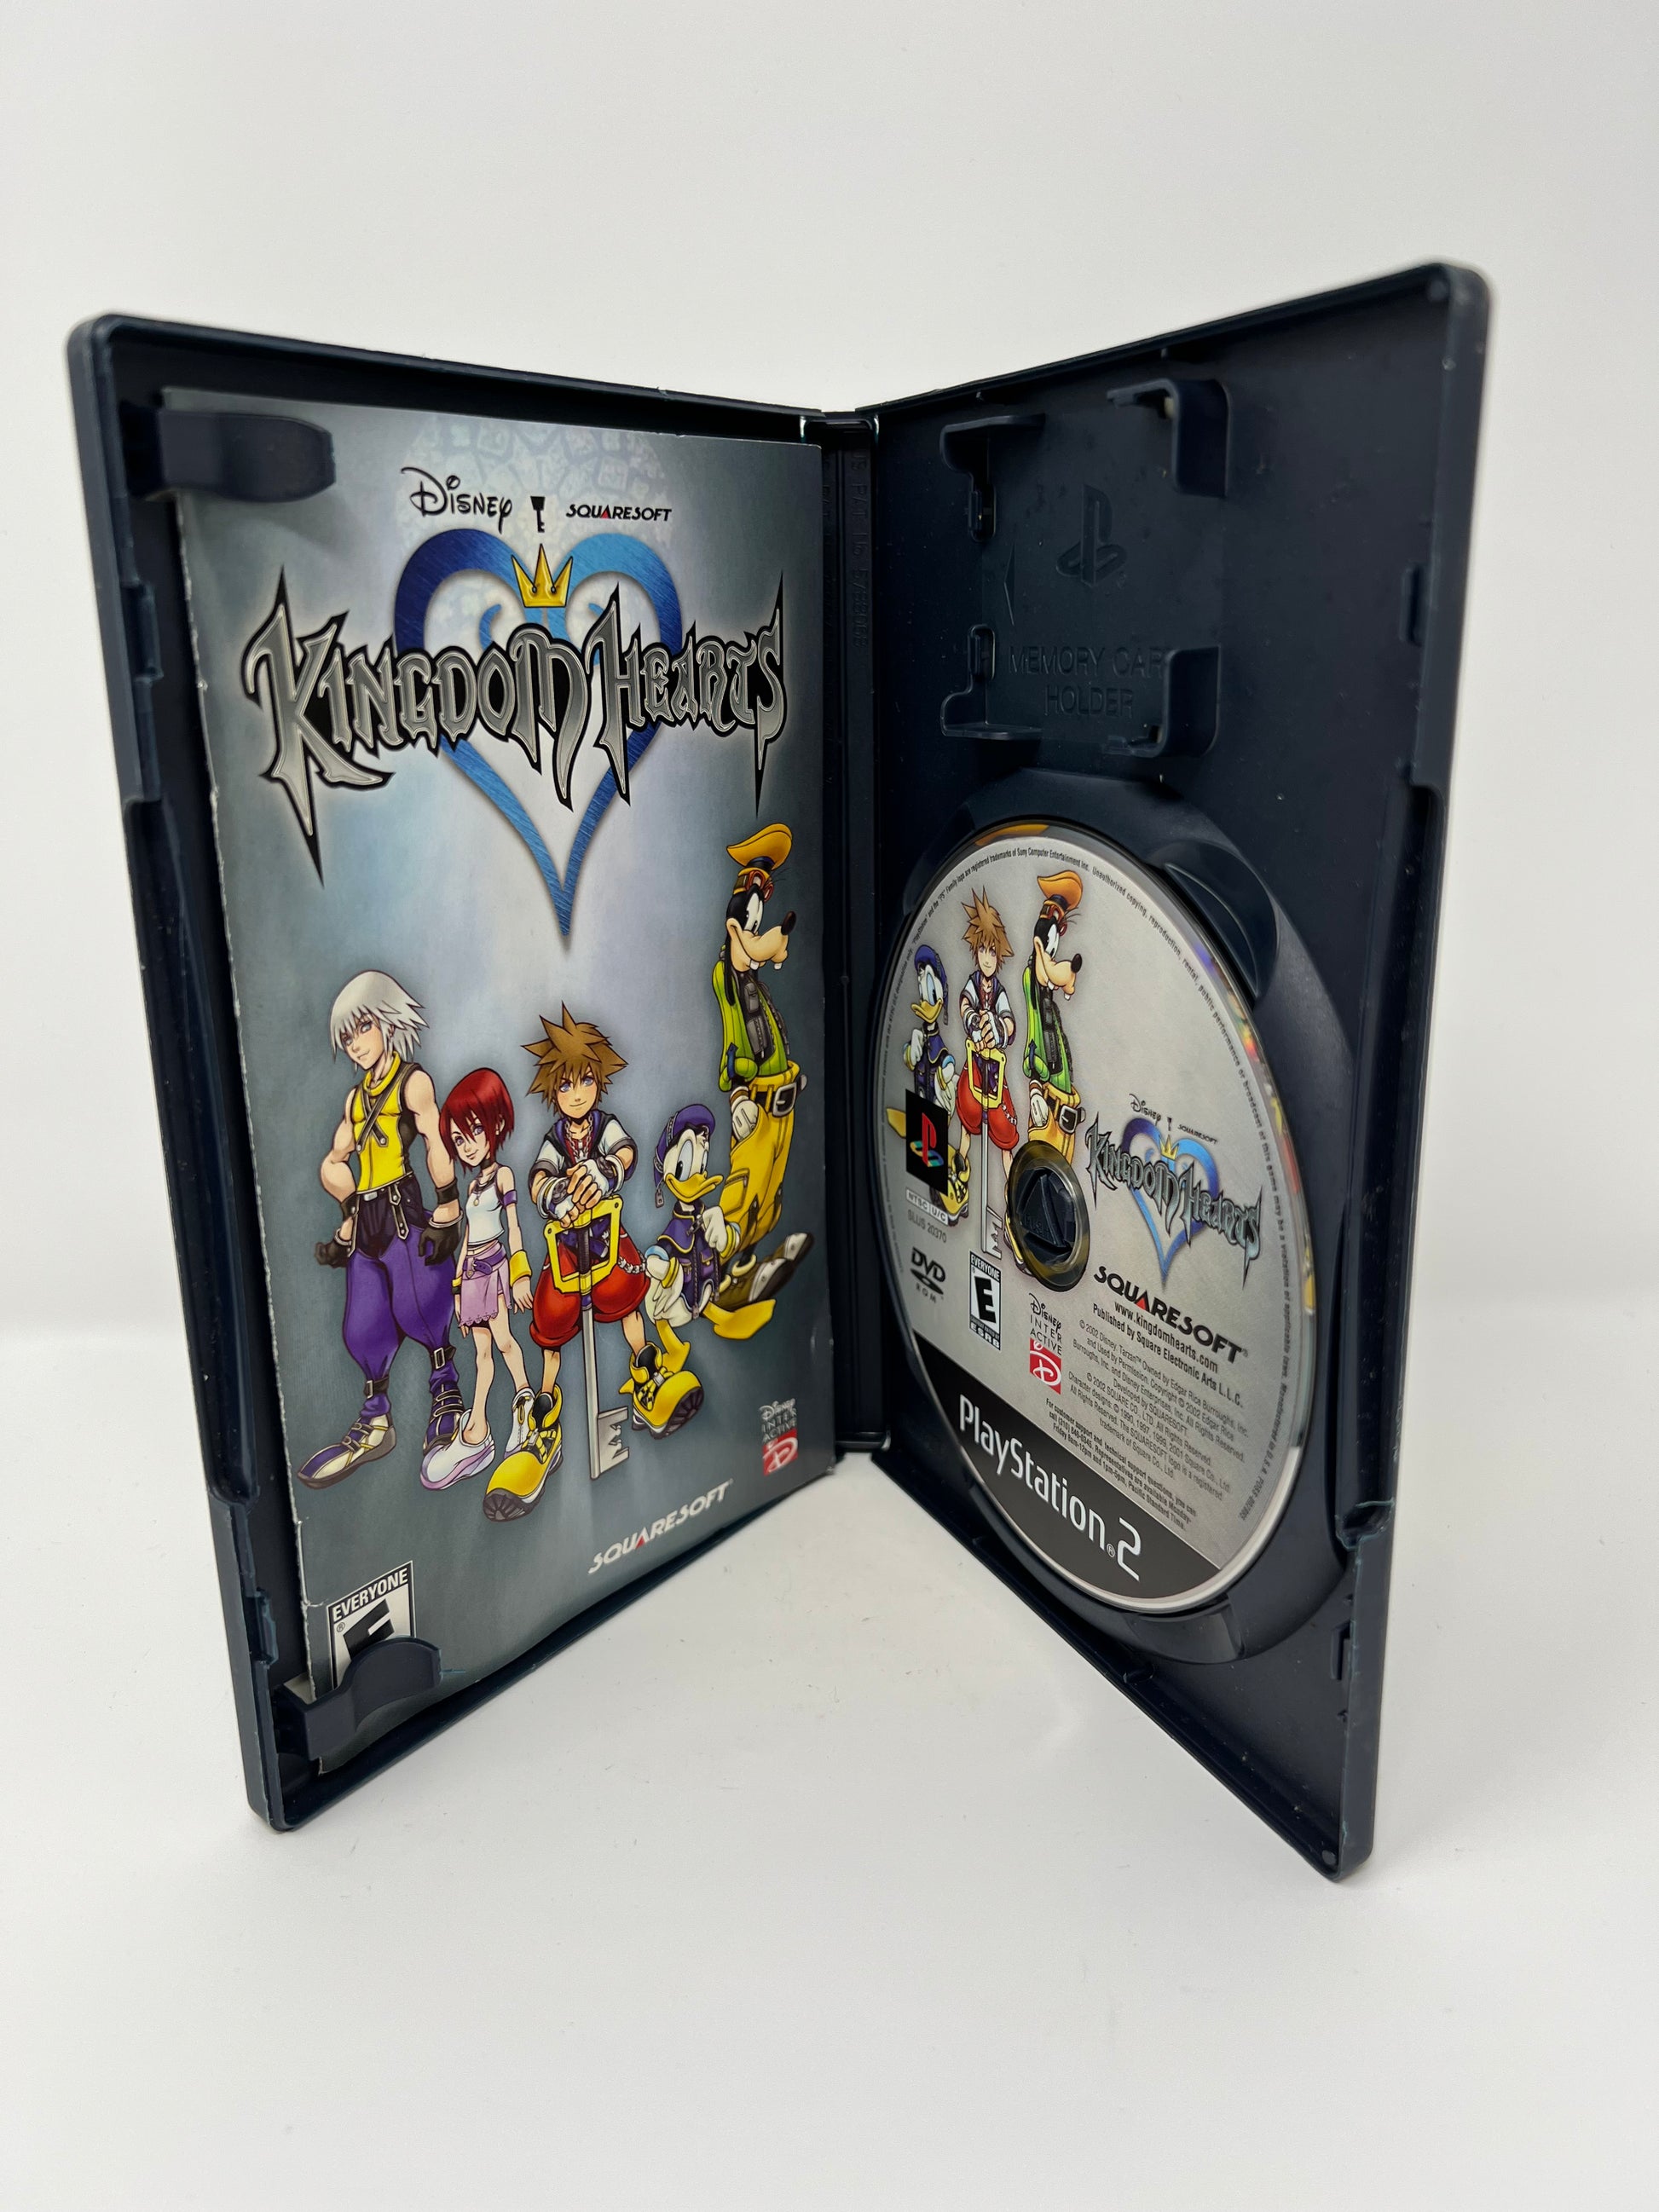 Buy Kingdom Hearts for PS2